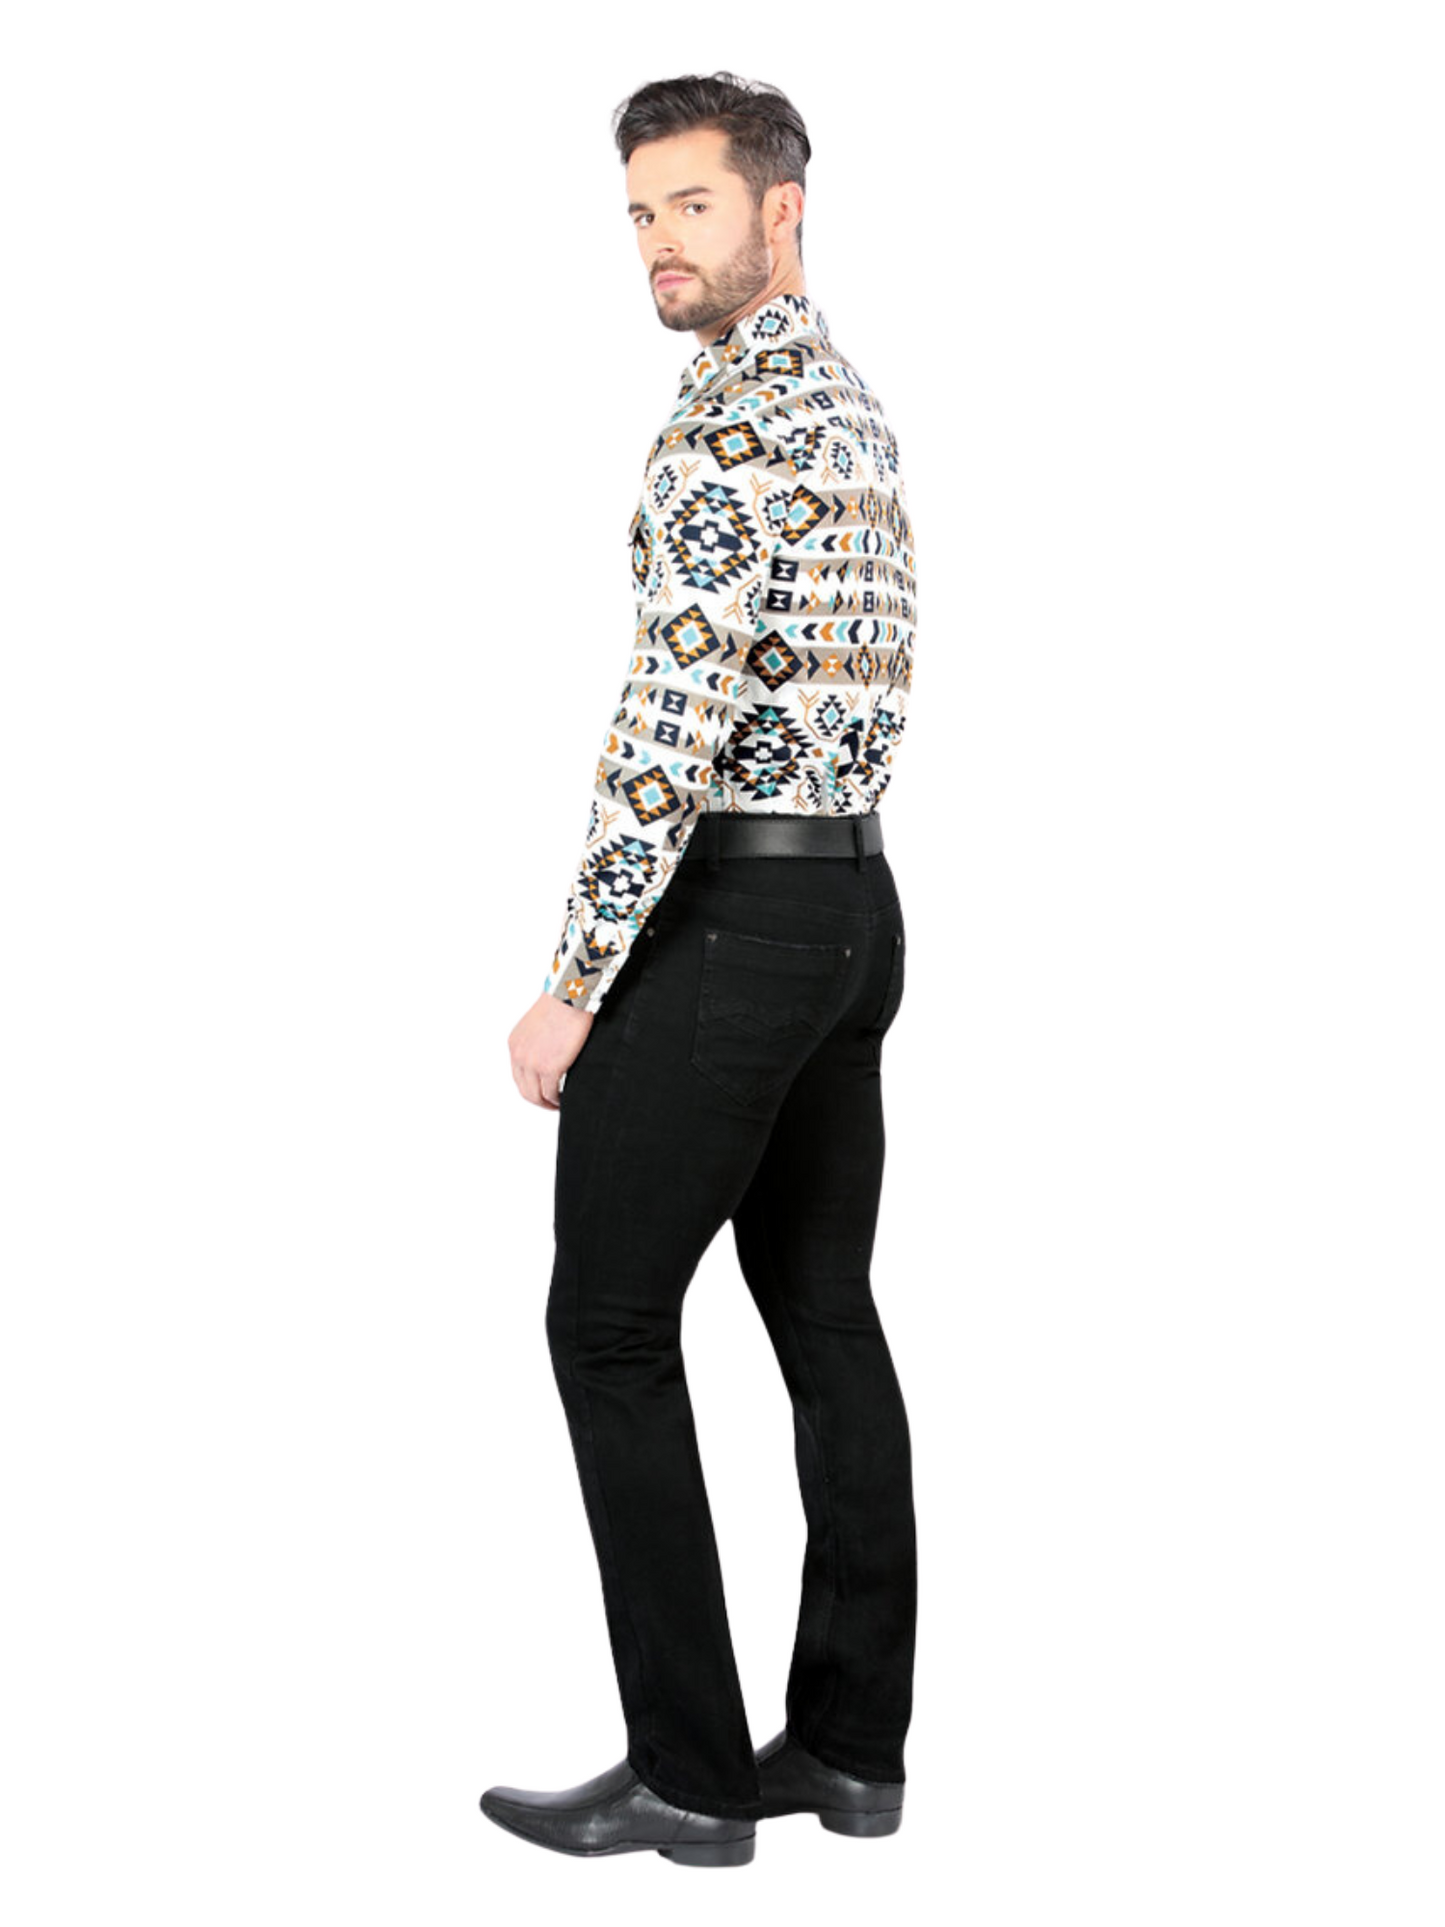 Stretch Denim Jeans for Men 'Montero' - ID: 5303 Denim Jeans Montero